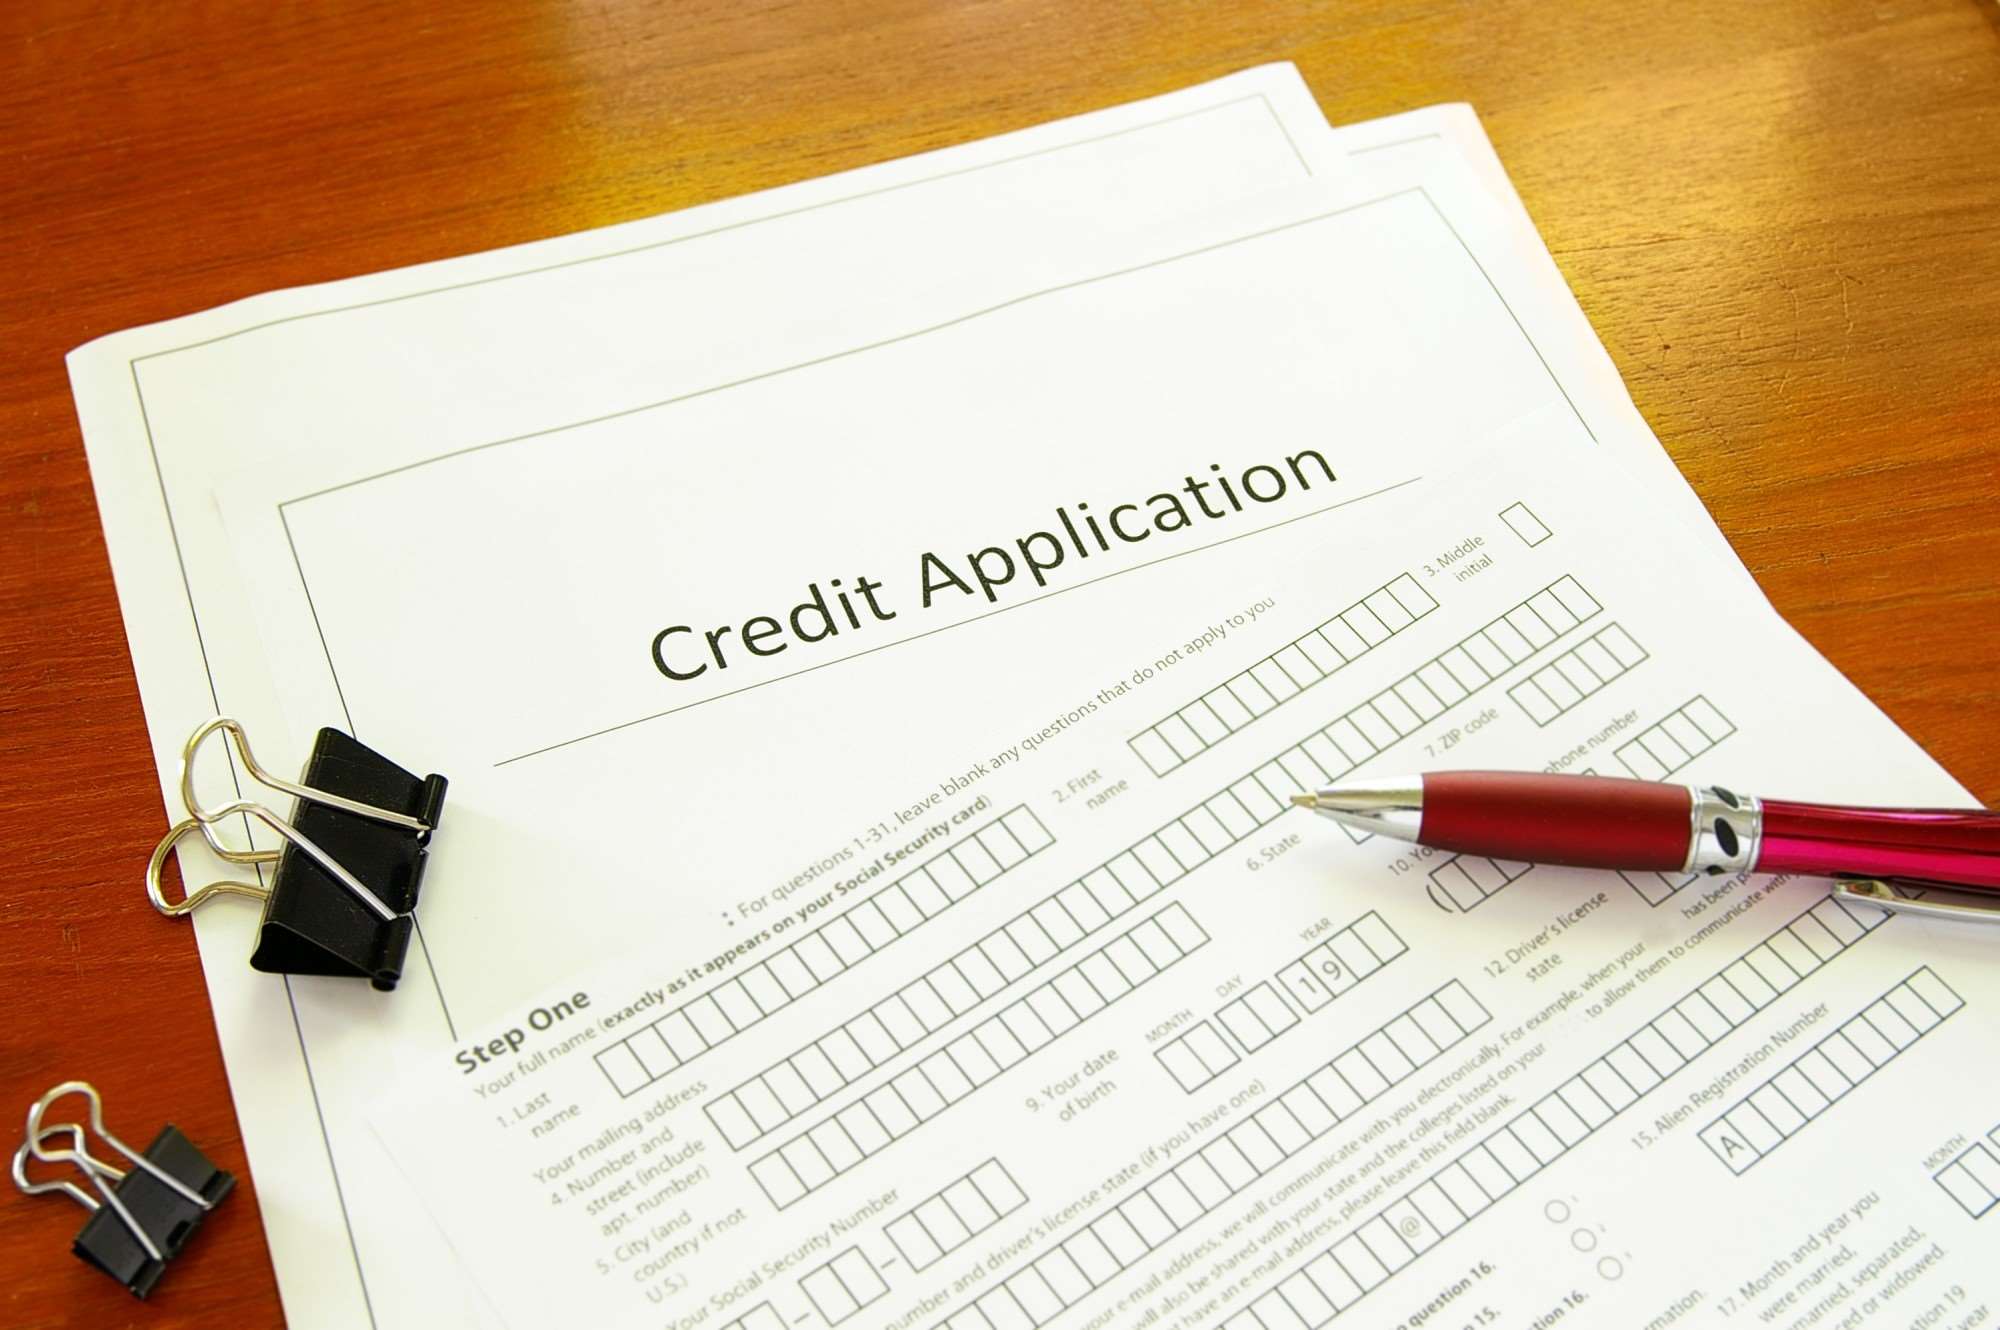 Minimize credit applications to improve credit score.